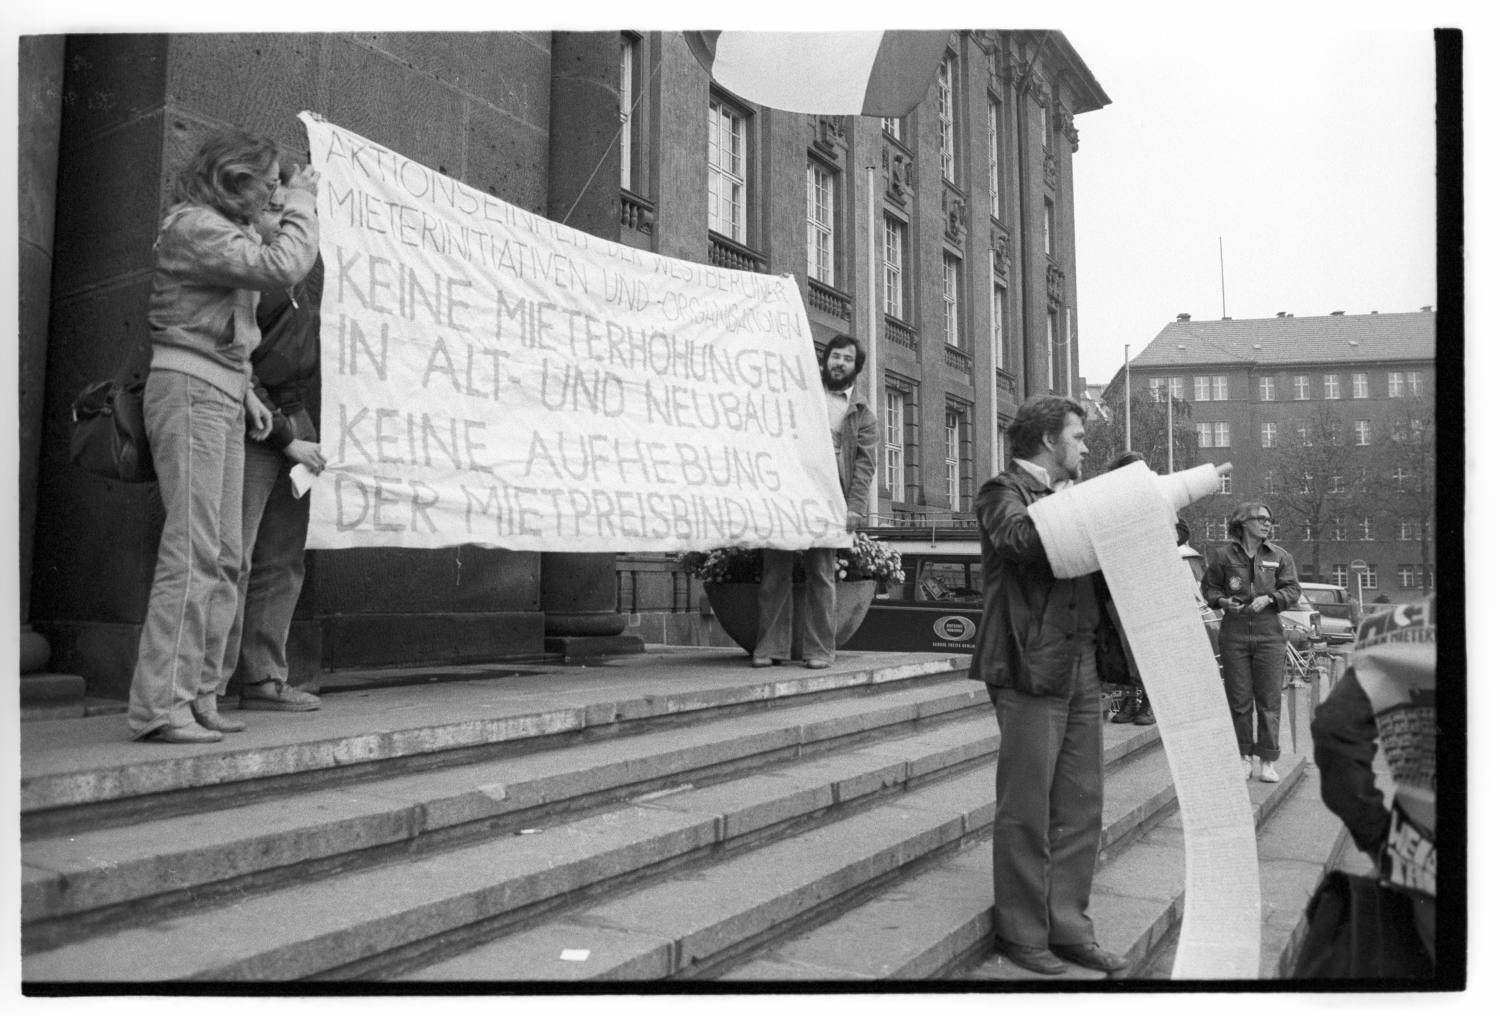 Kleinbildnegative: Demonstration gegen Mietpreiserhöhung, 1980 (Museen Tempelhof-Schöneberg/Jürgen Henschel RR-F)